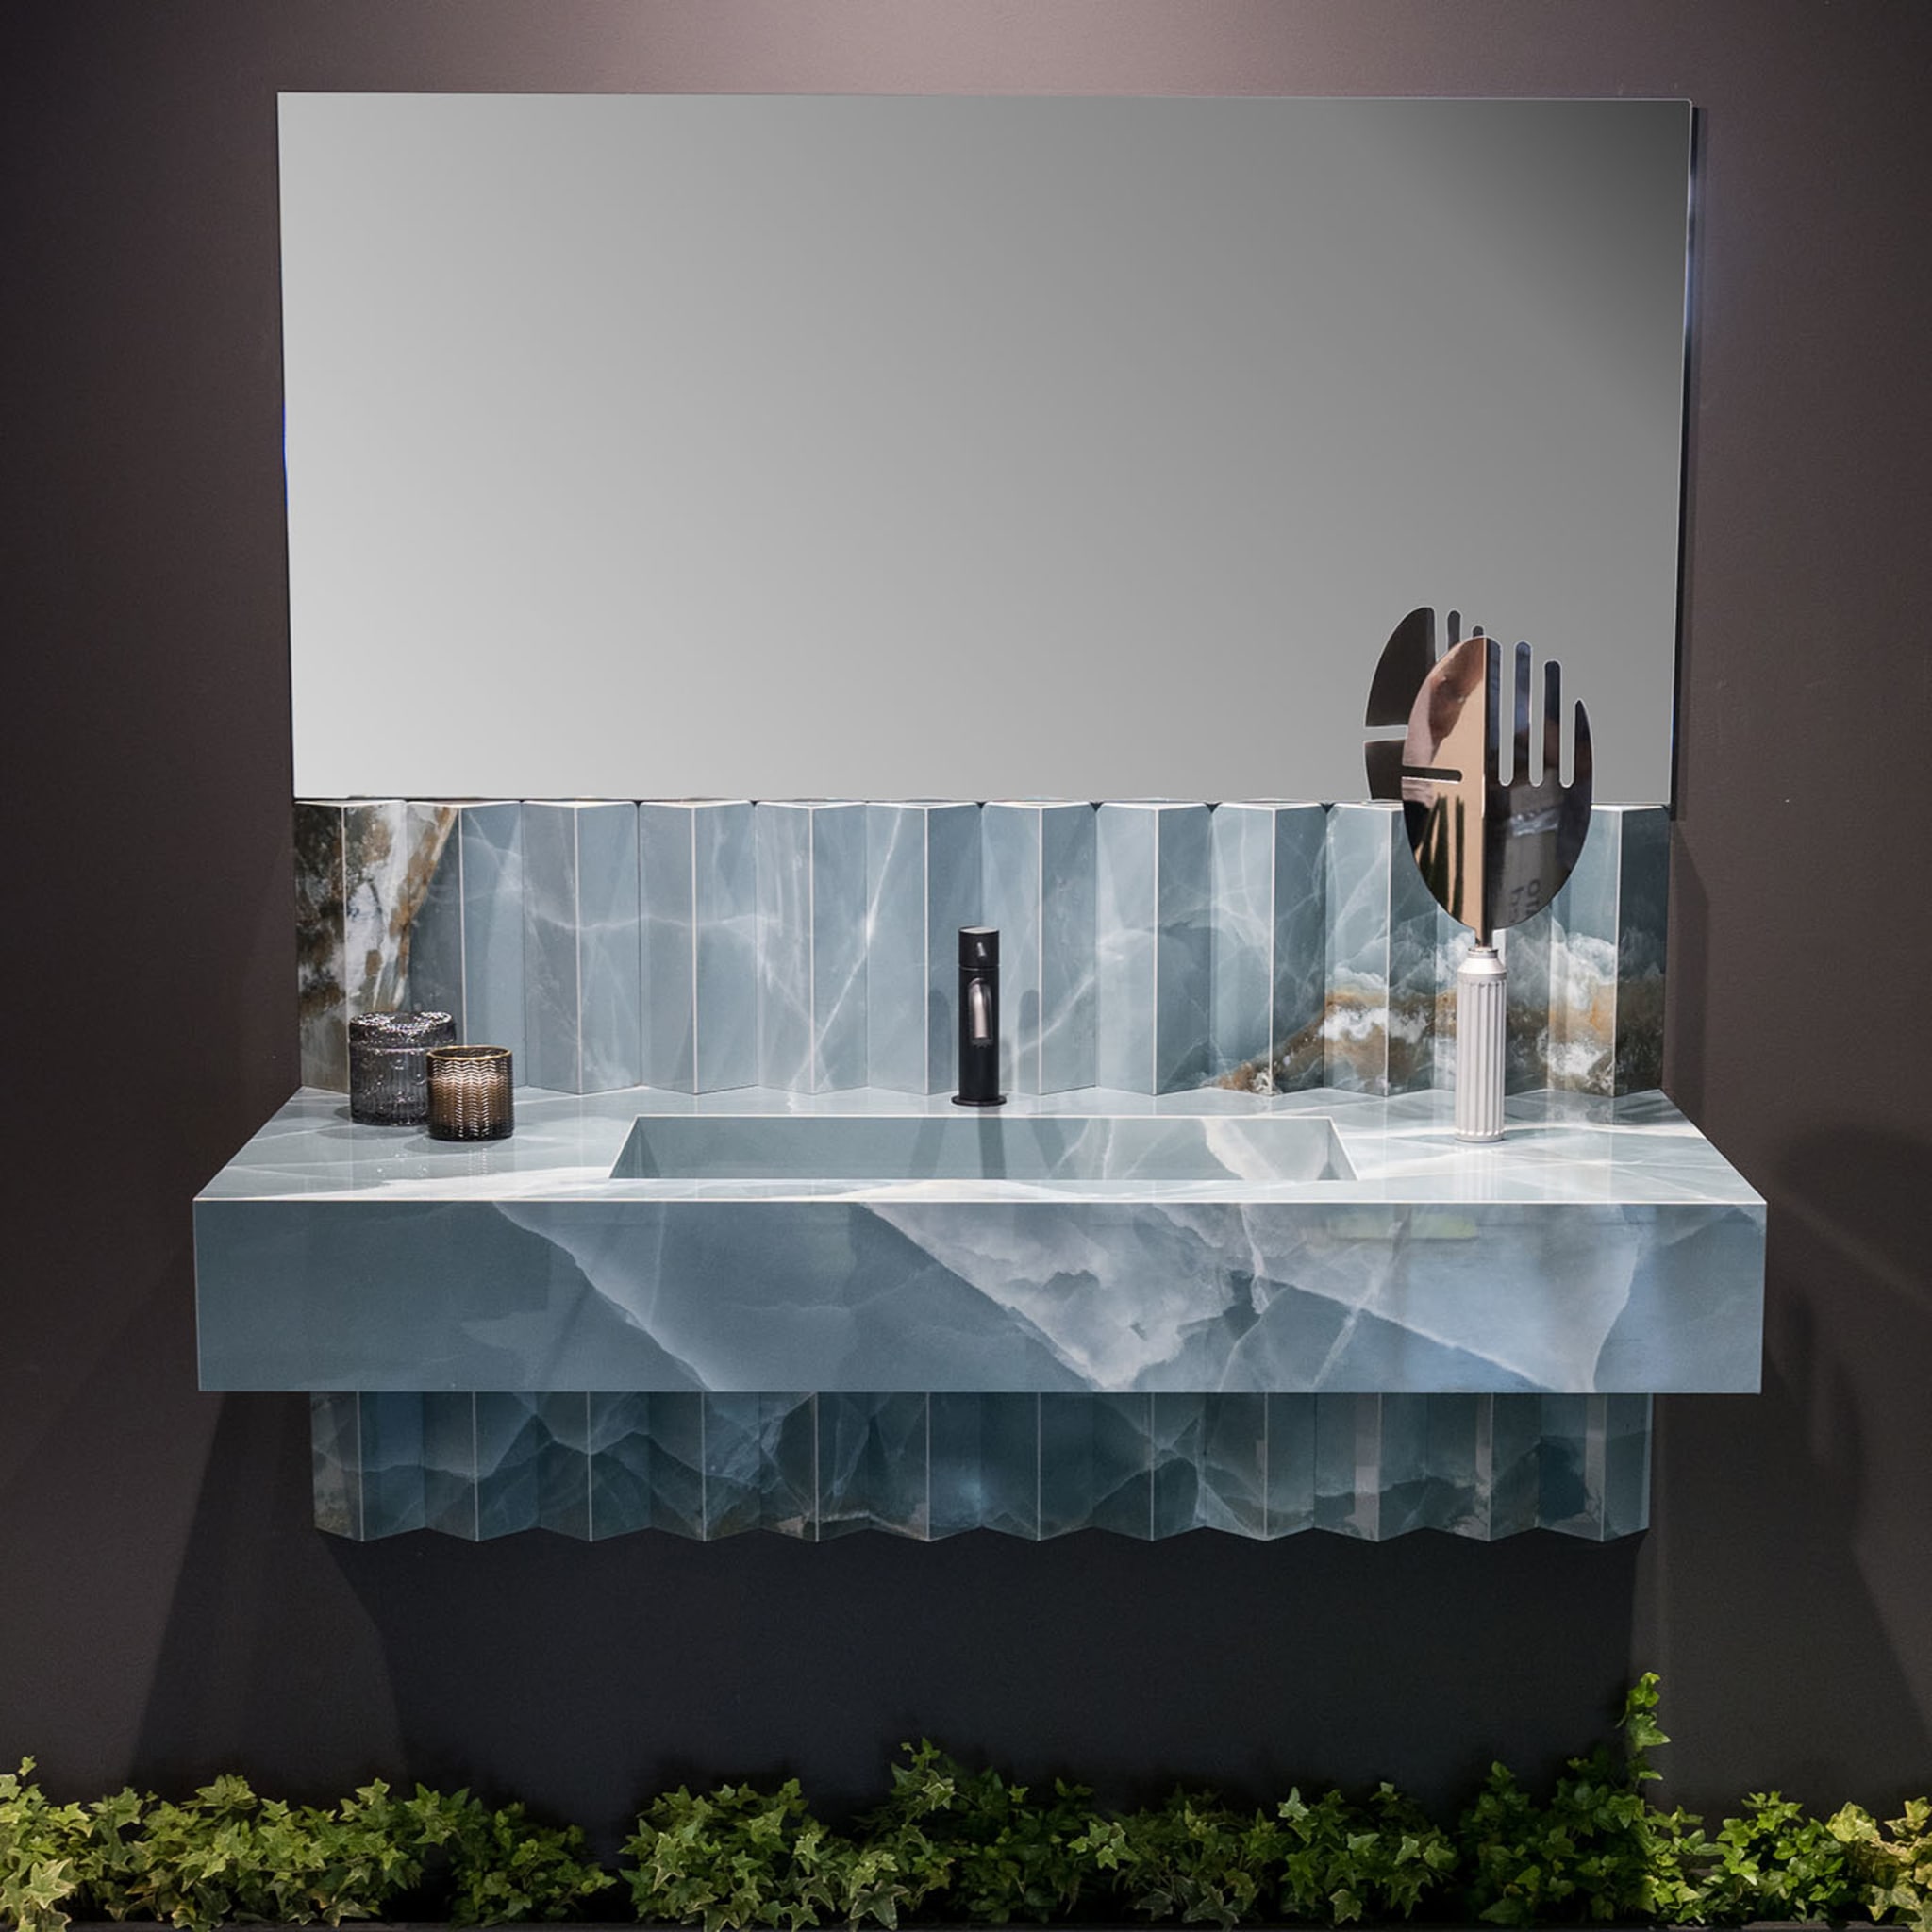 Ratio Bathroom Sink with Backsplash by Sapiens Design - Alternative view 3